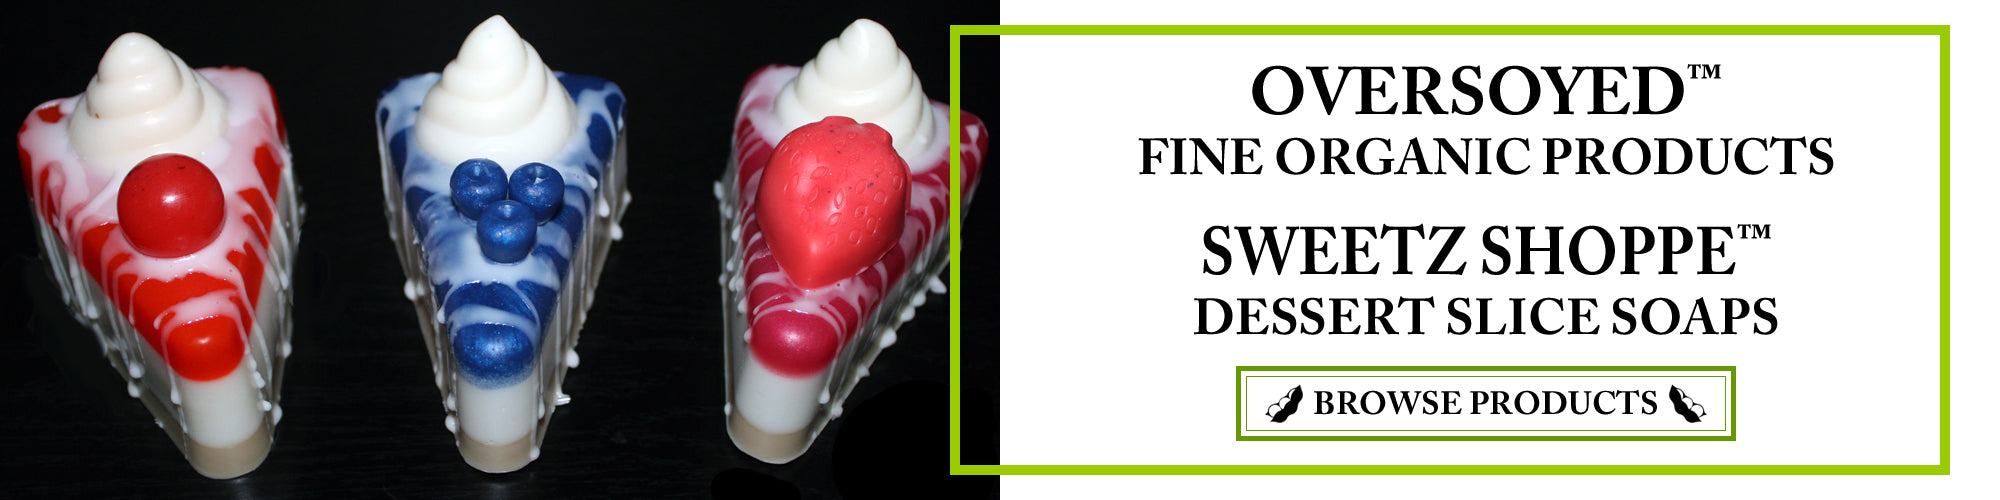 OverSoyed Fine Organic Products - Sweetz Shoppe™ Dessert Slice Soaps